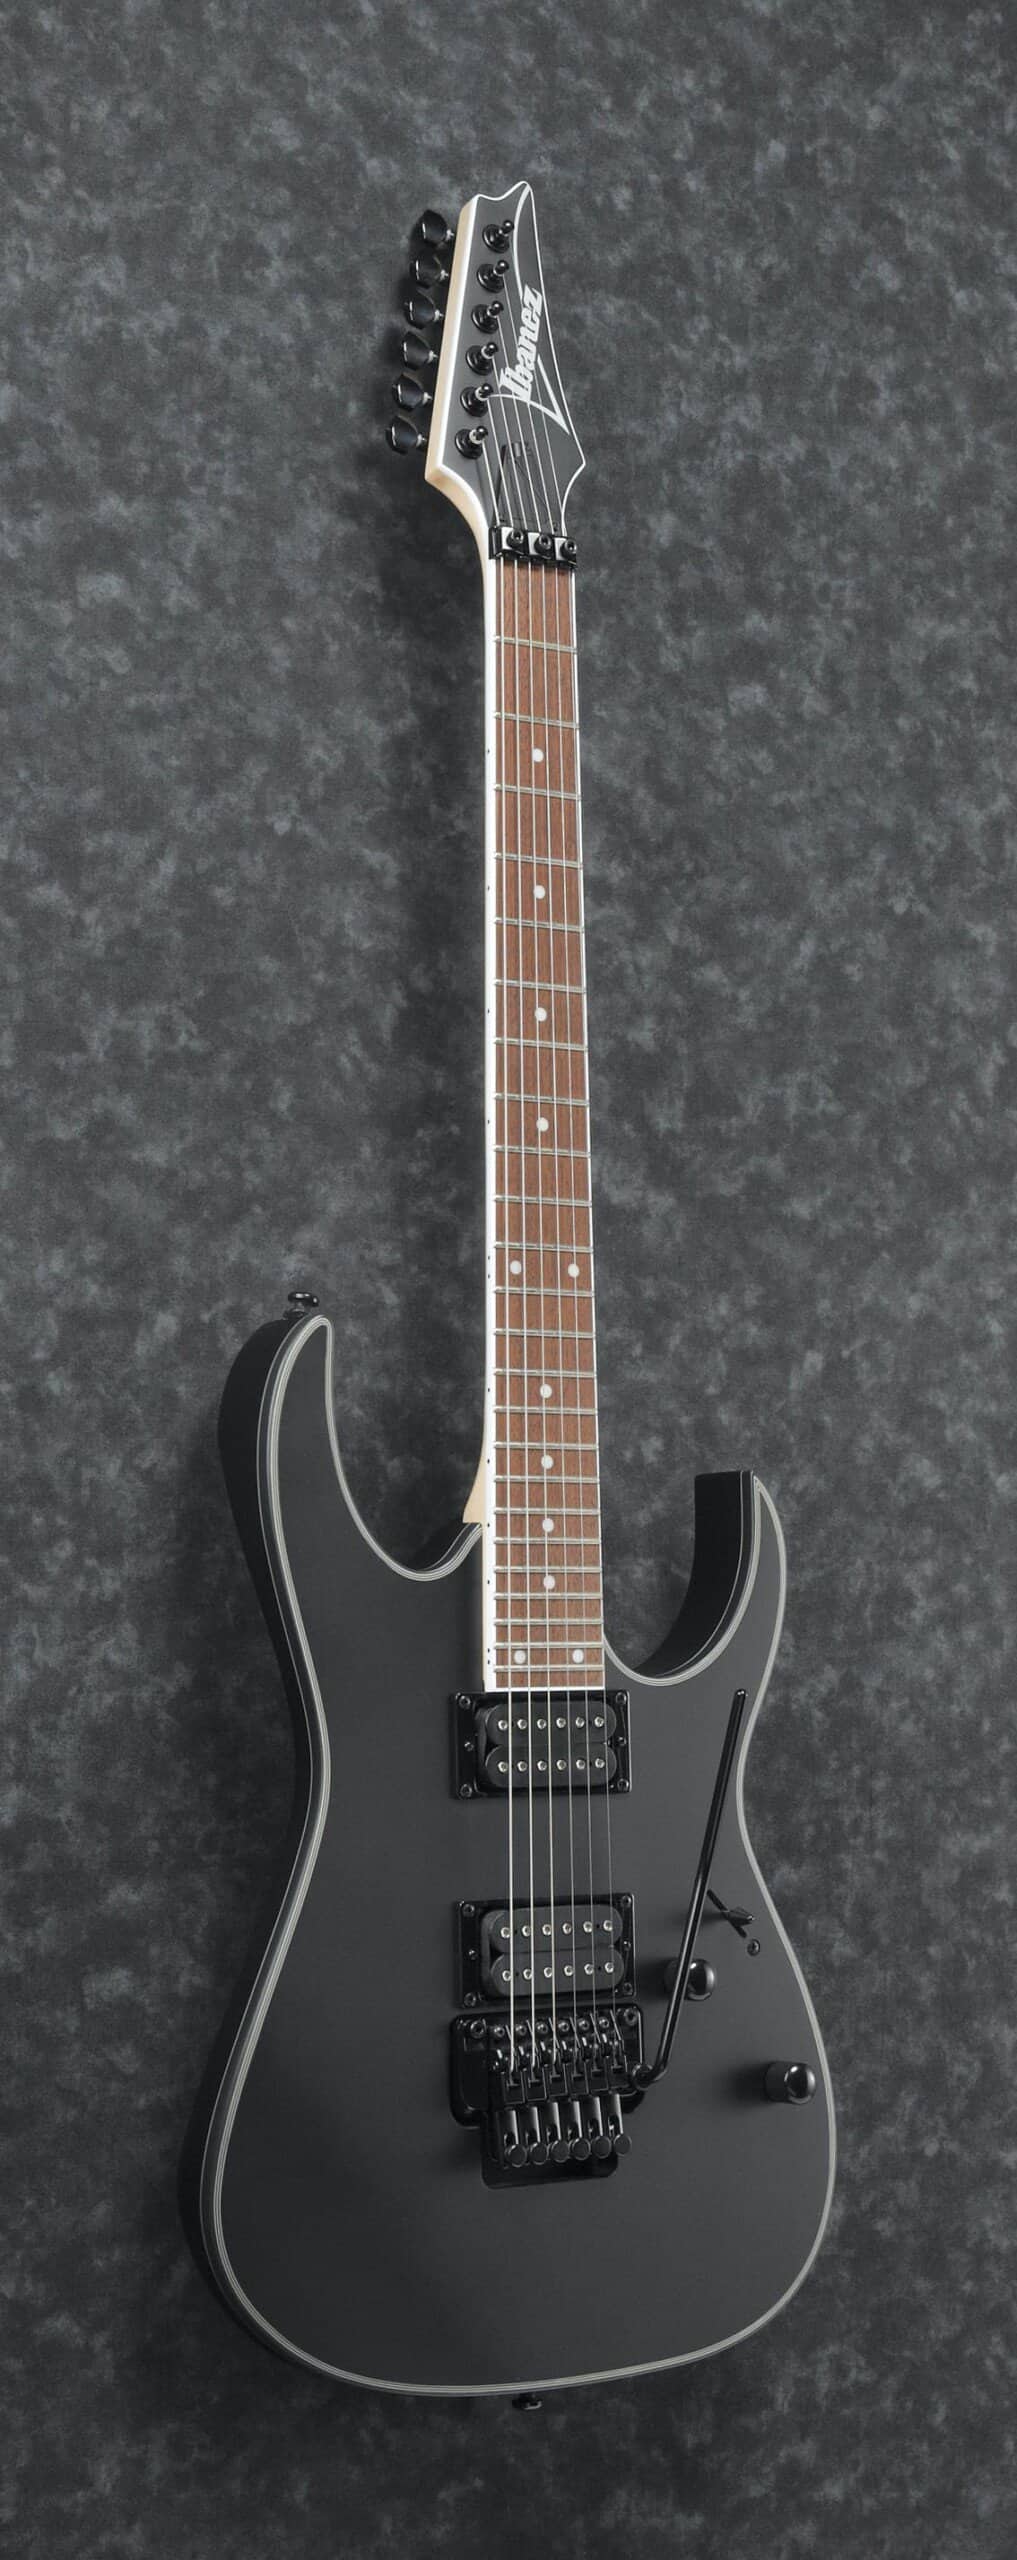 Ibanez-RG320EXZBKF-Electric-Guitar-RG-Series-Black-Angle